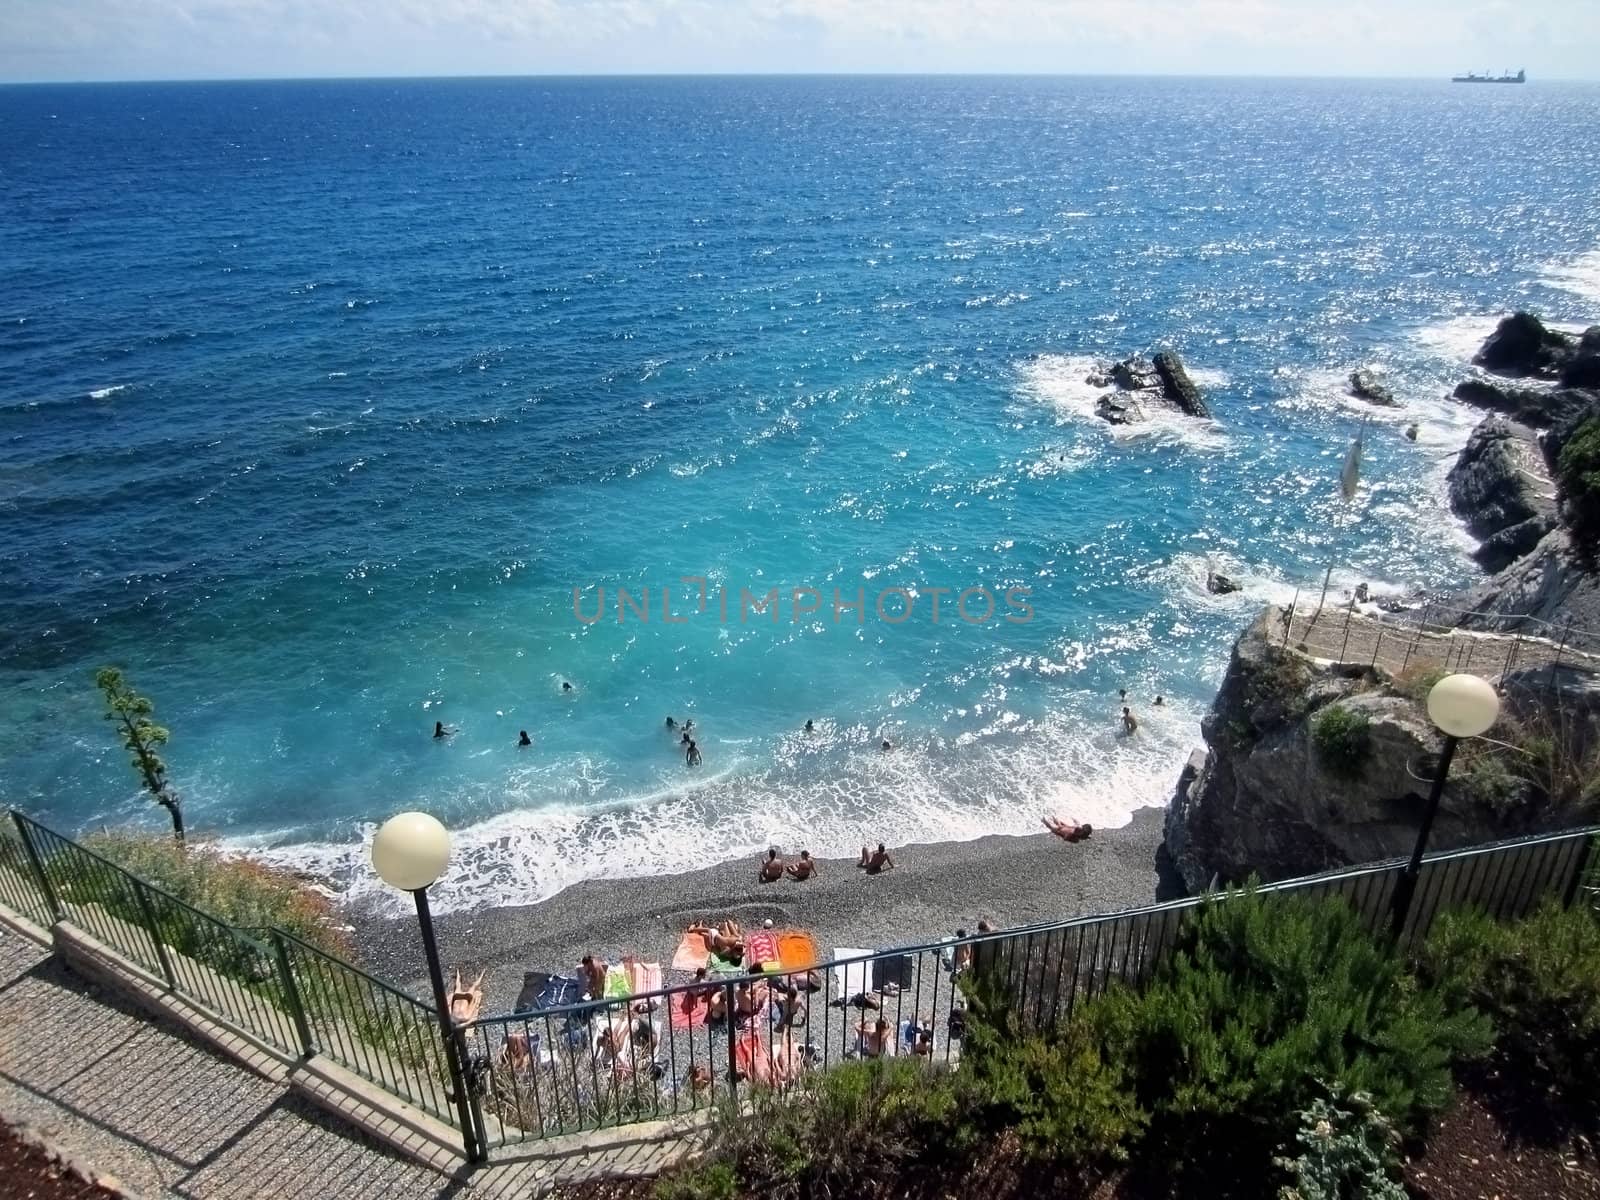 Coast of Italy in Liguria